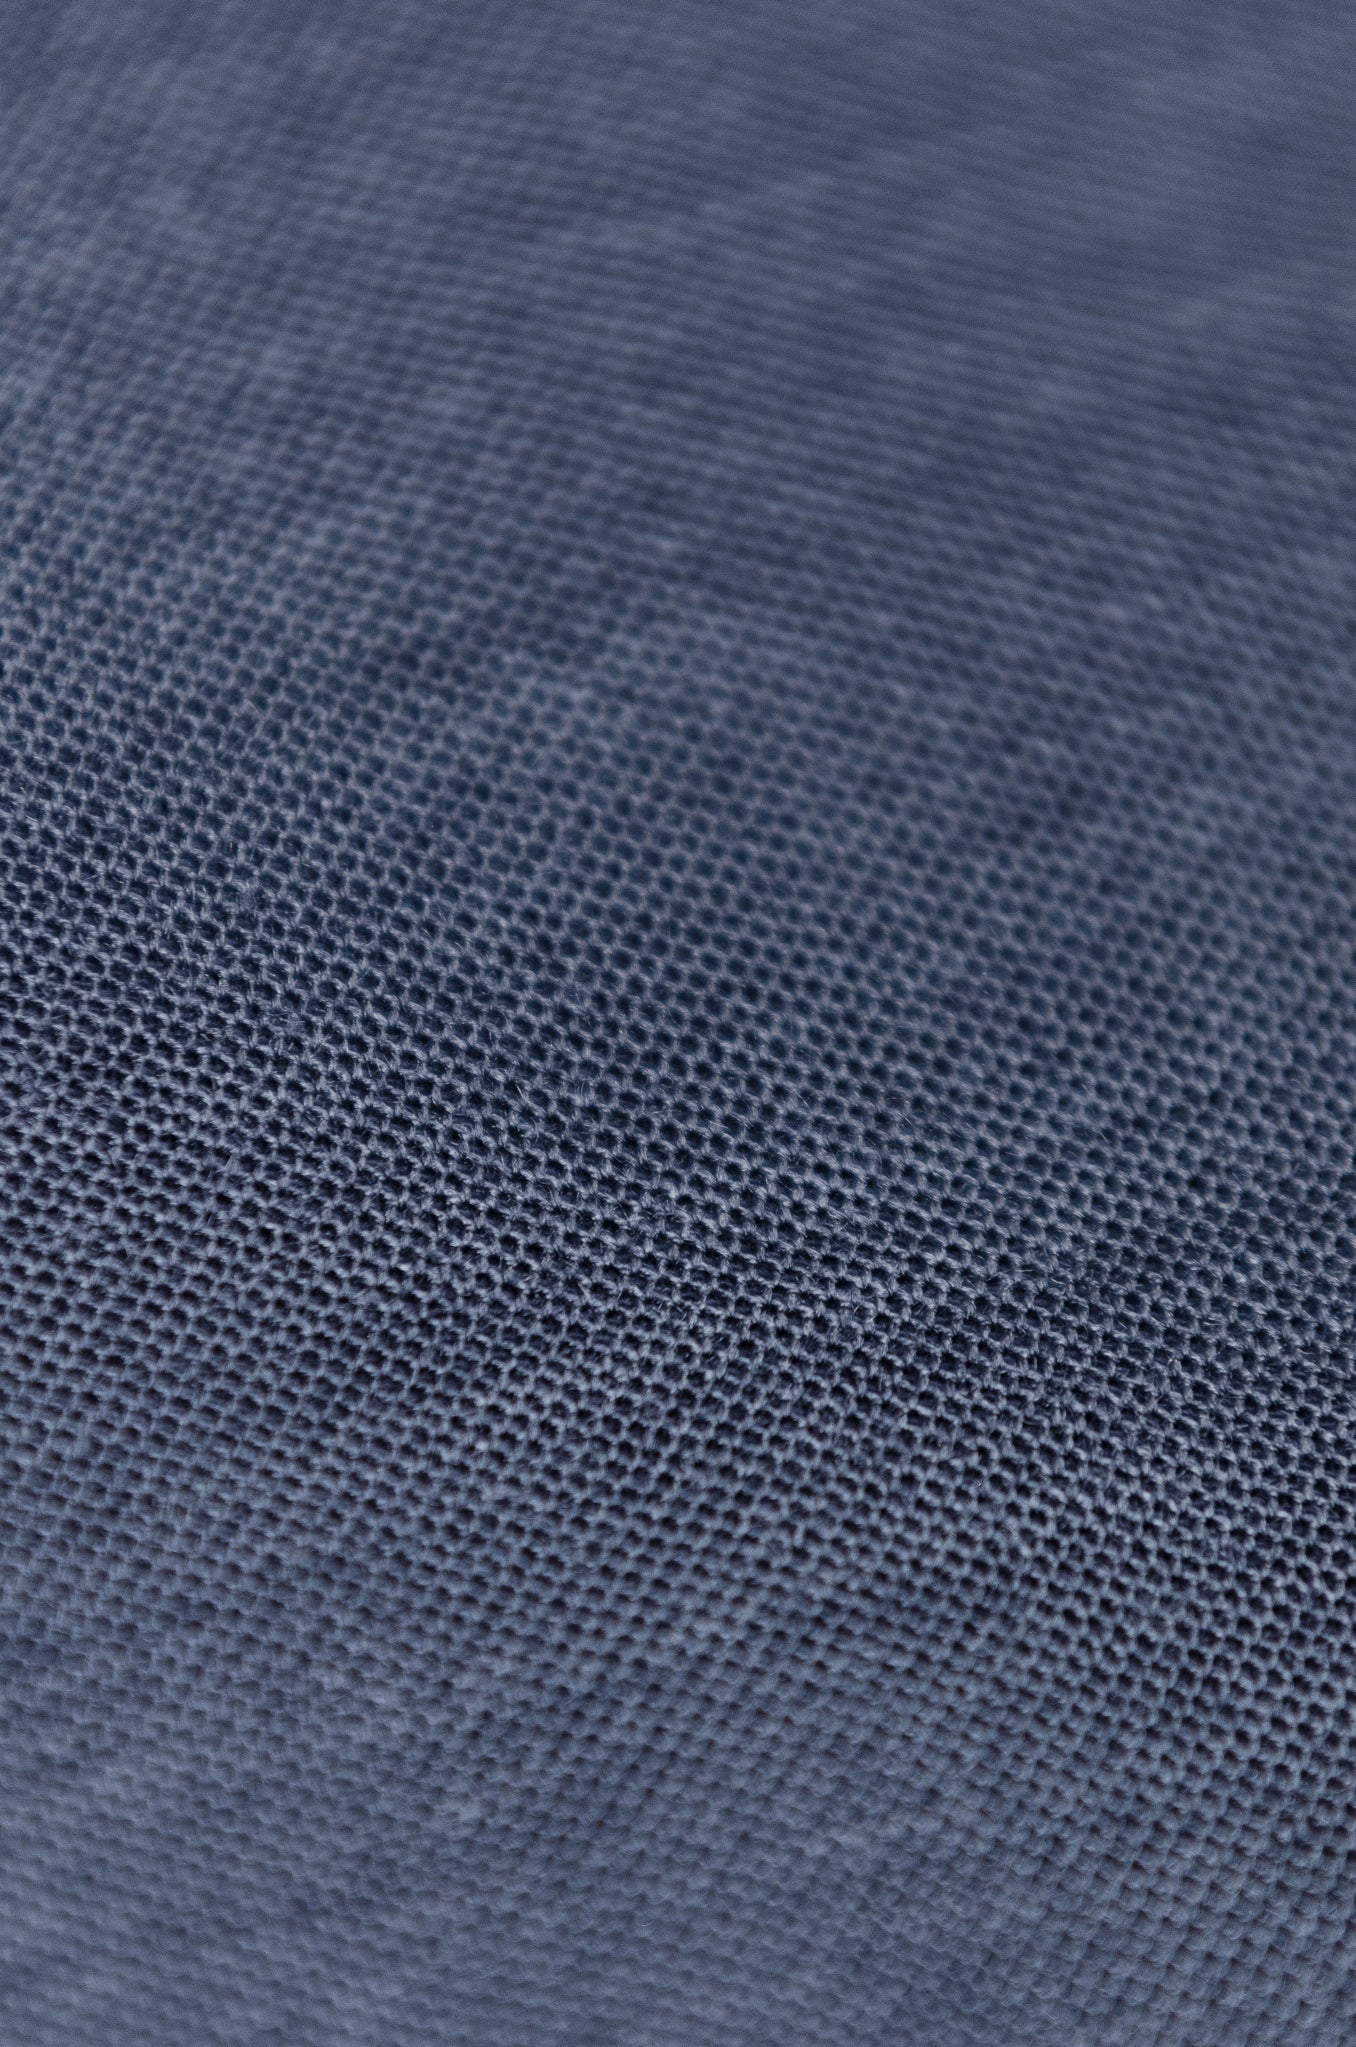 Jean Polo Shirt Silk and Cotton (dark blue)